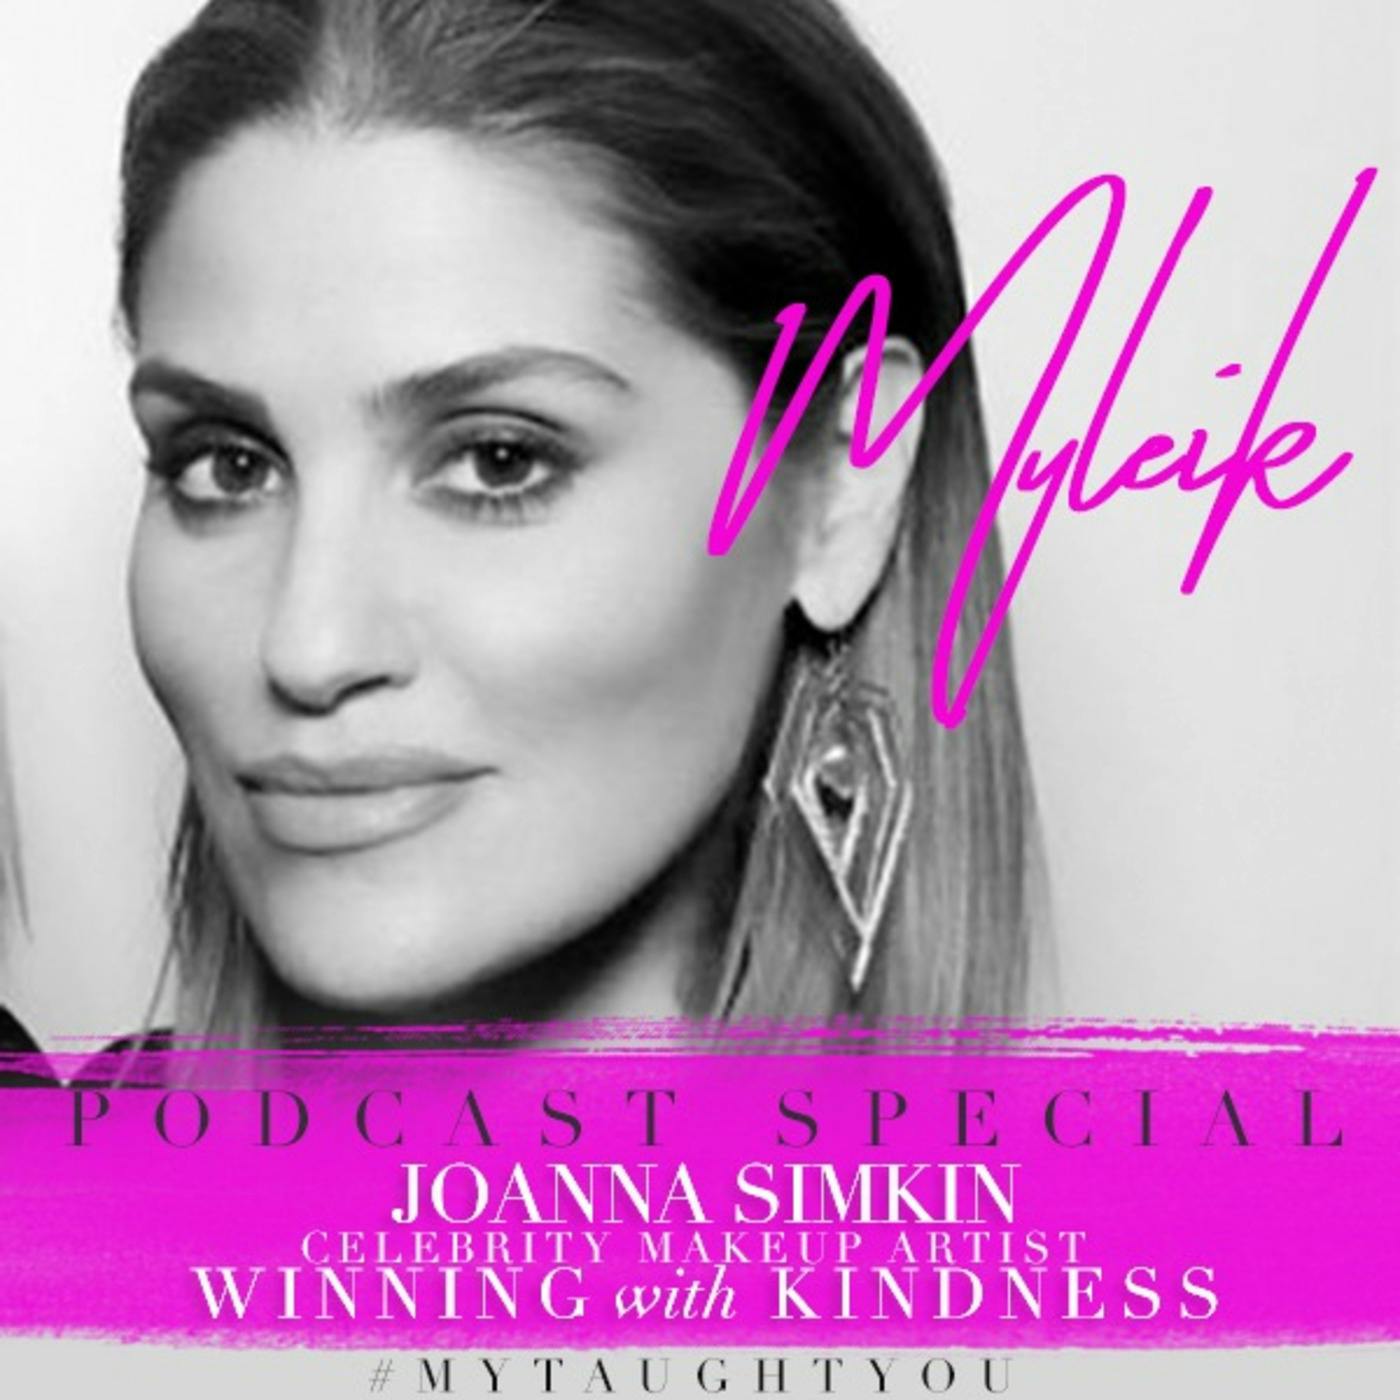 Thumbnail for "120: Winning with Kindness: Joanna Simkin".